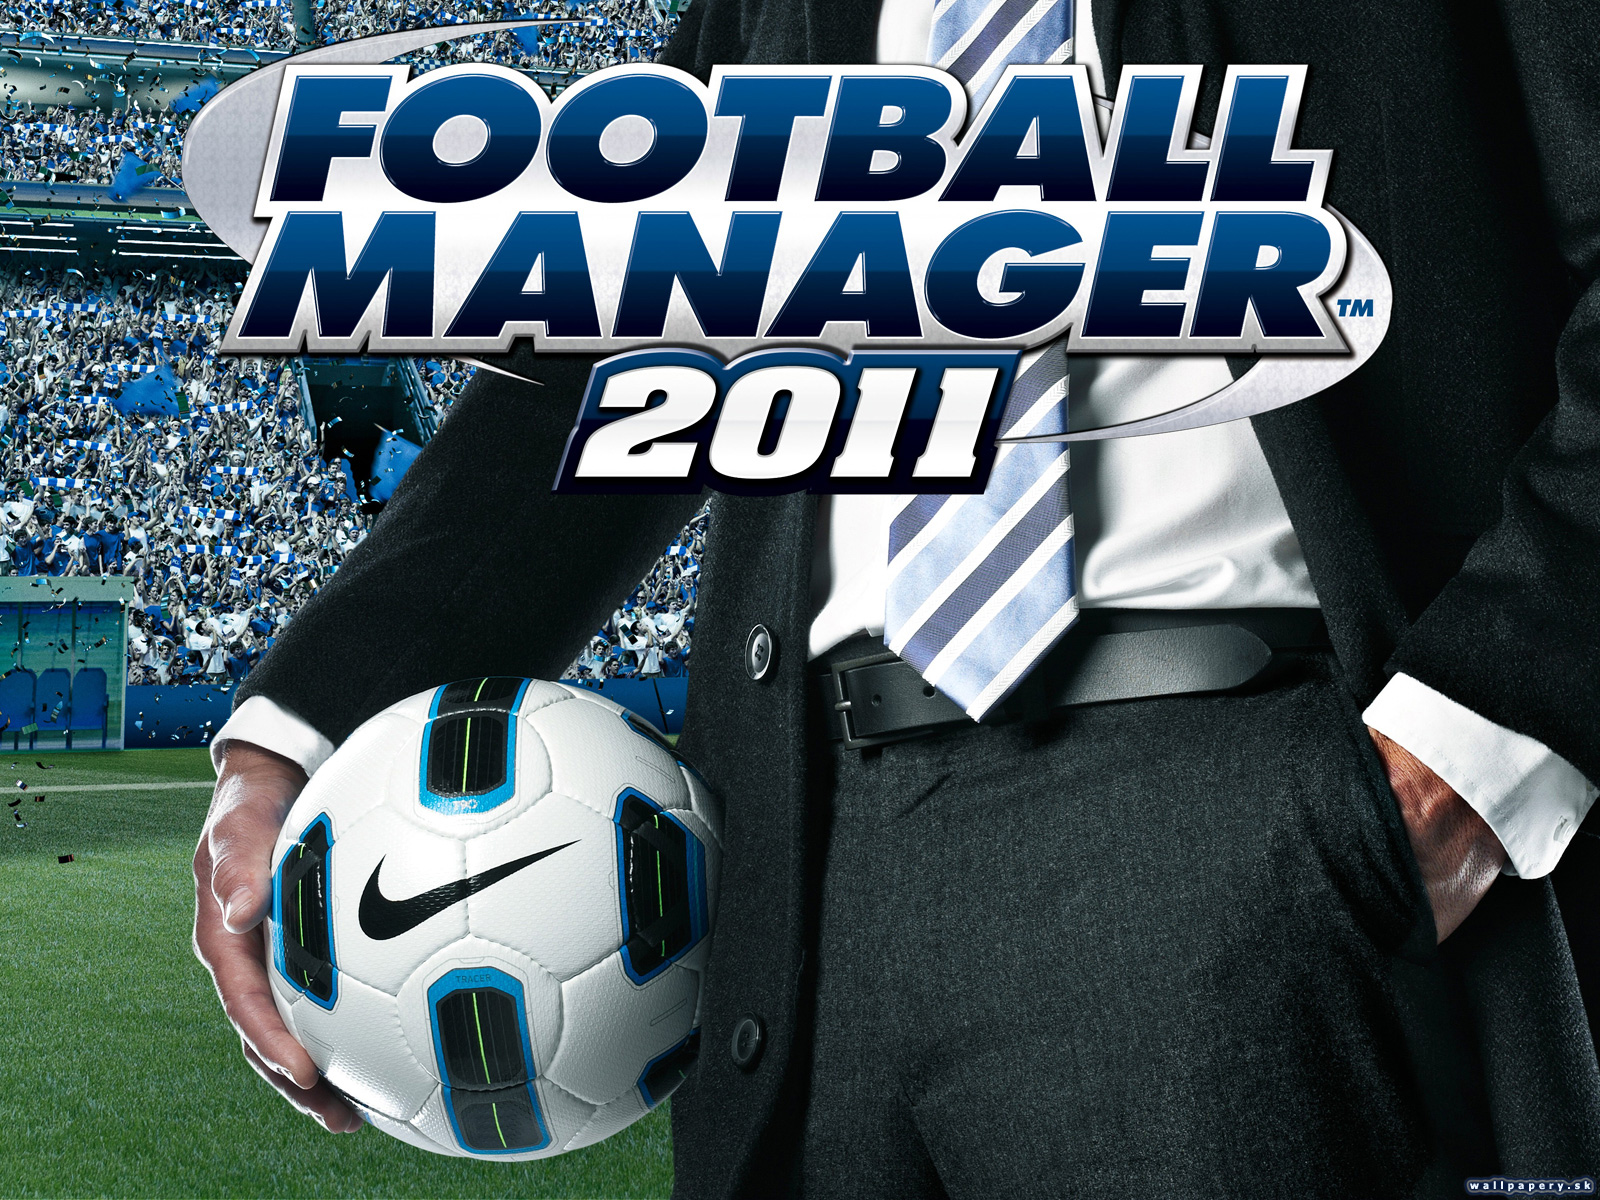 Football Manager 2011 - wallpaper 2